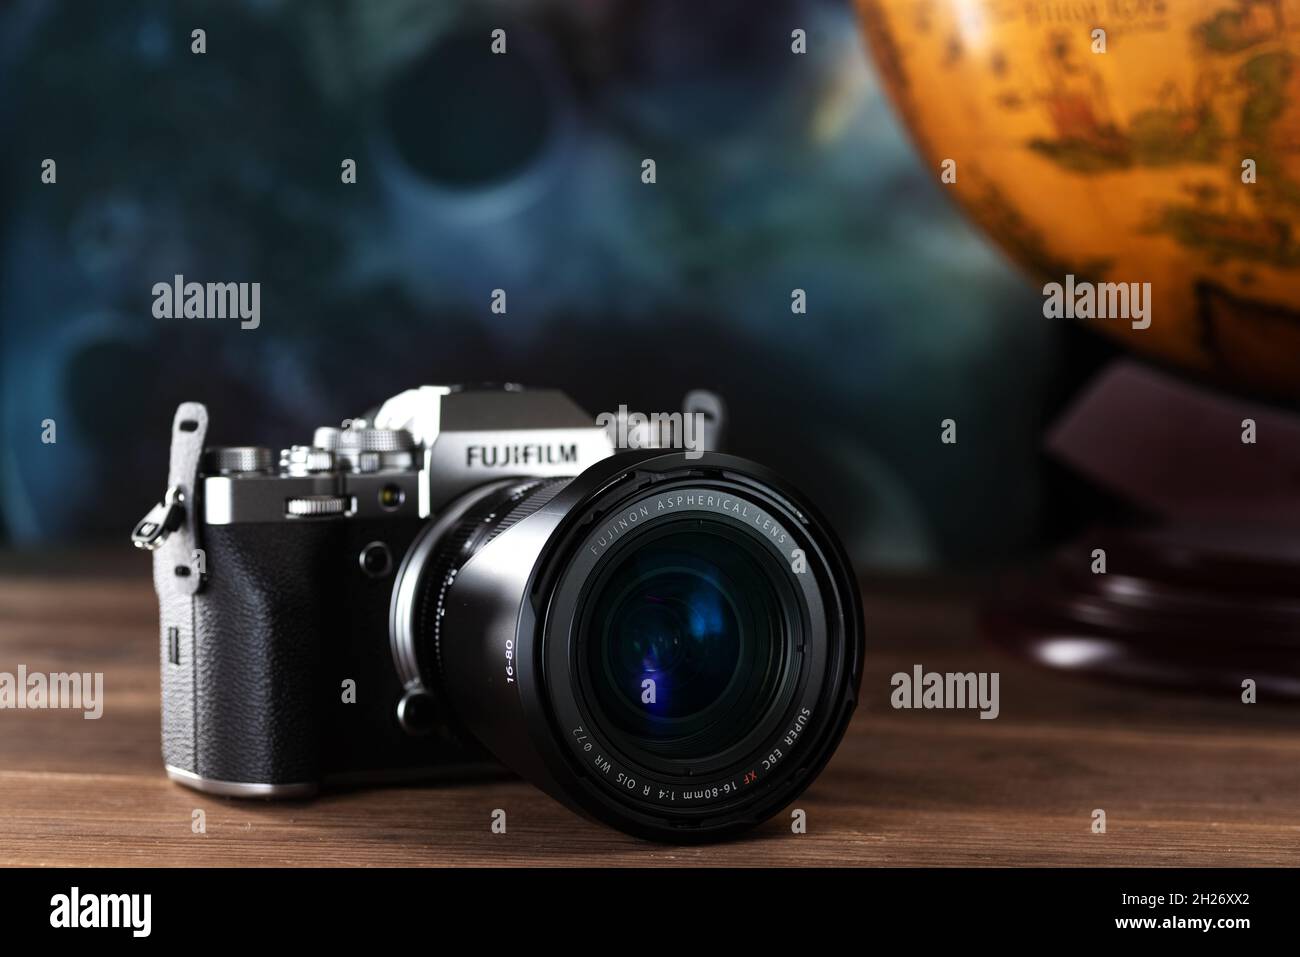 Fuji xt4 hi-res stock photography and images - Alamy